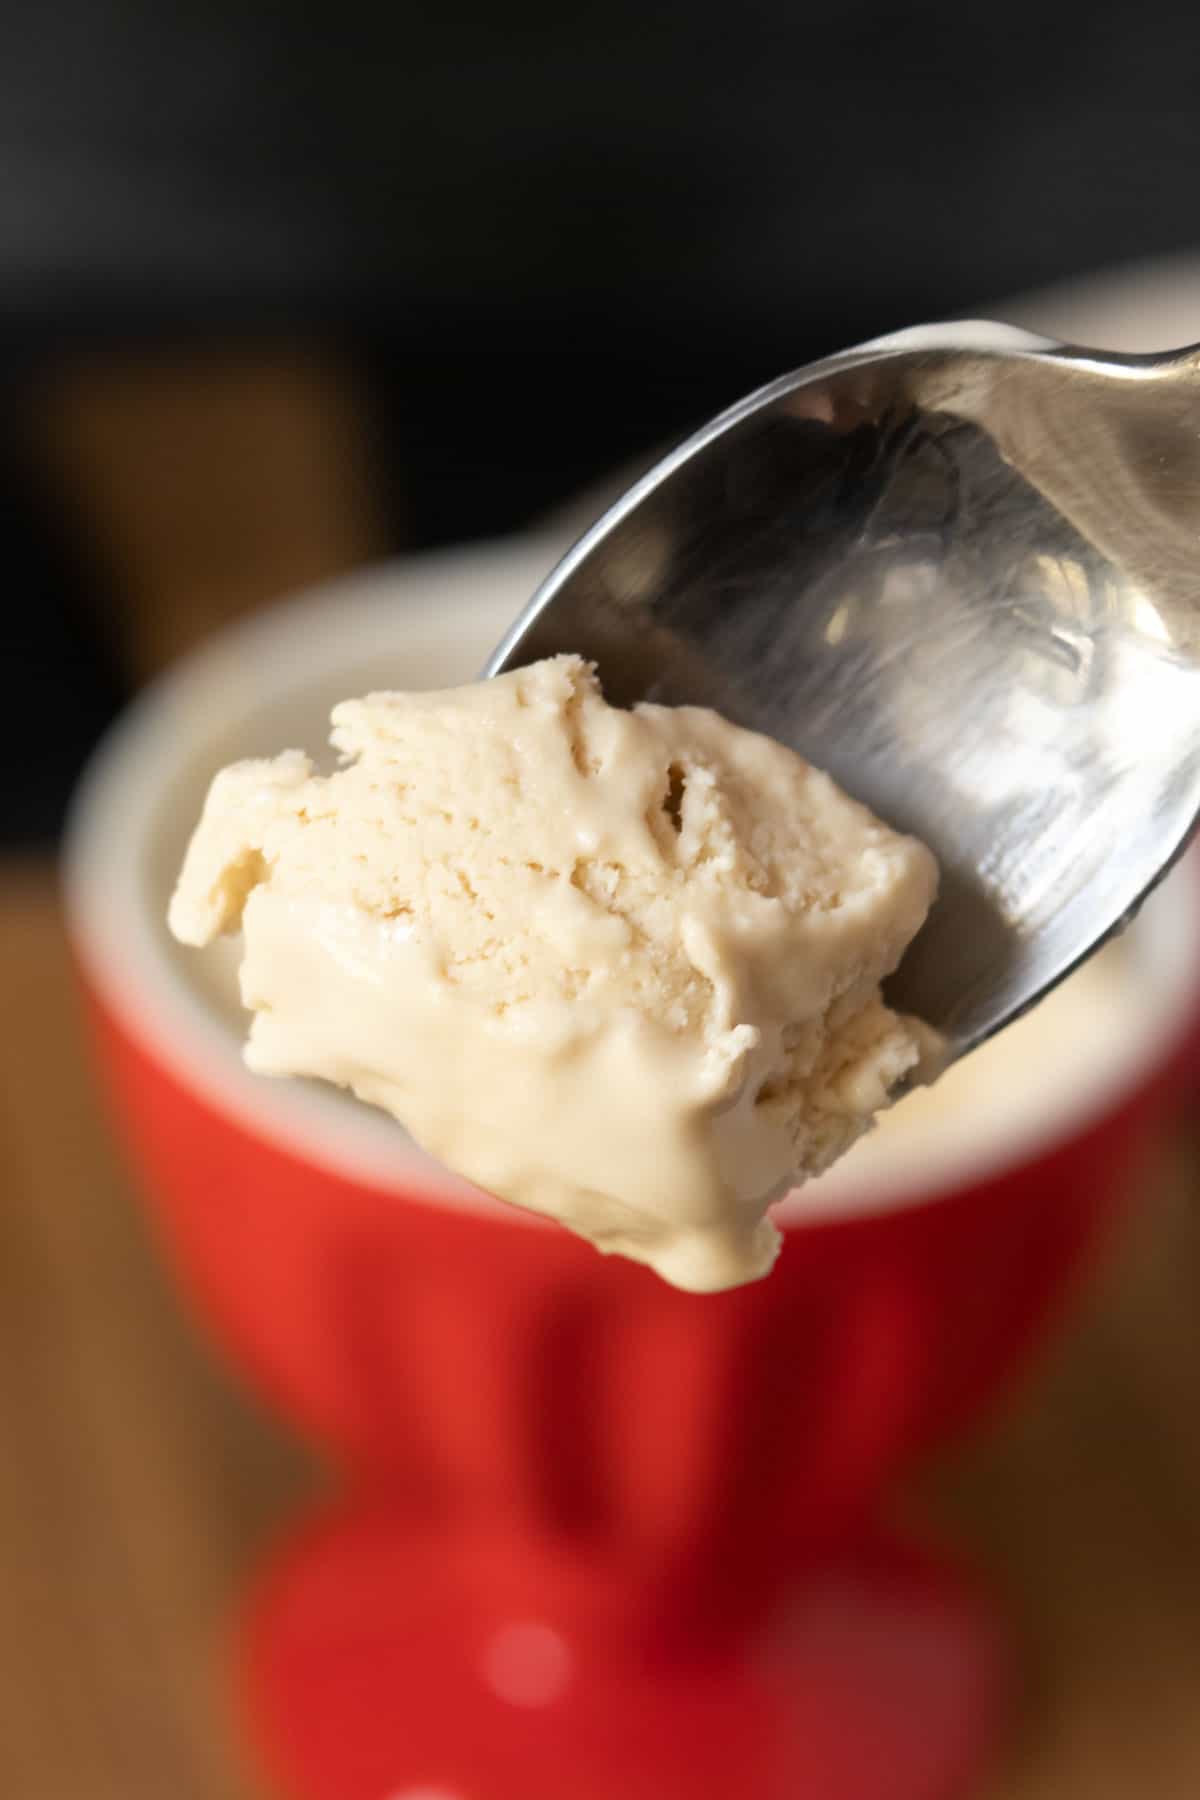 Spoonful of no-churn ice cream.